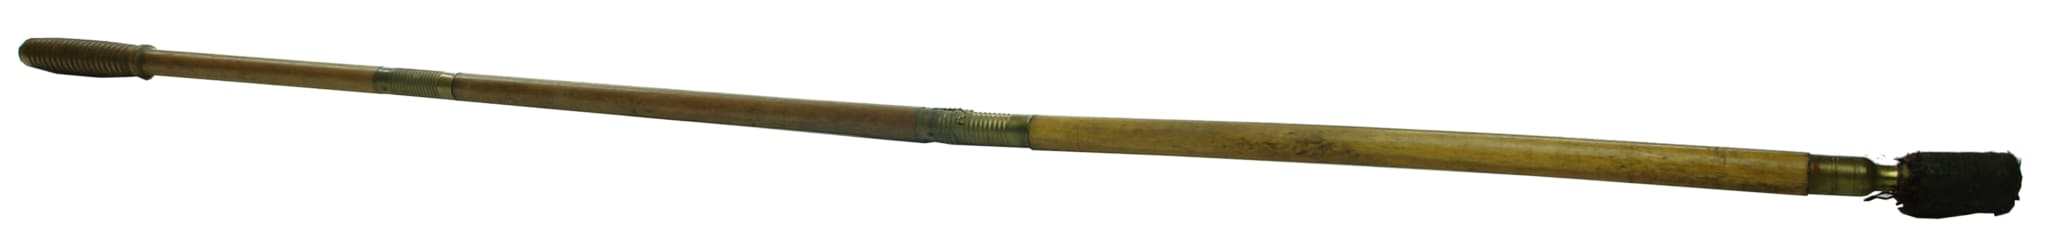 Brass Wood Shotgun Cleaning Rod